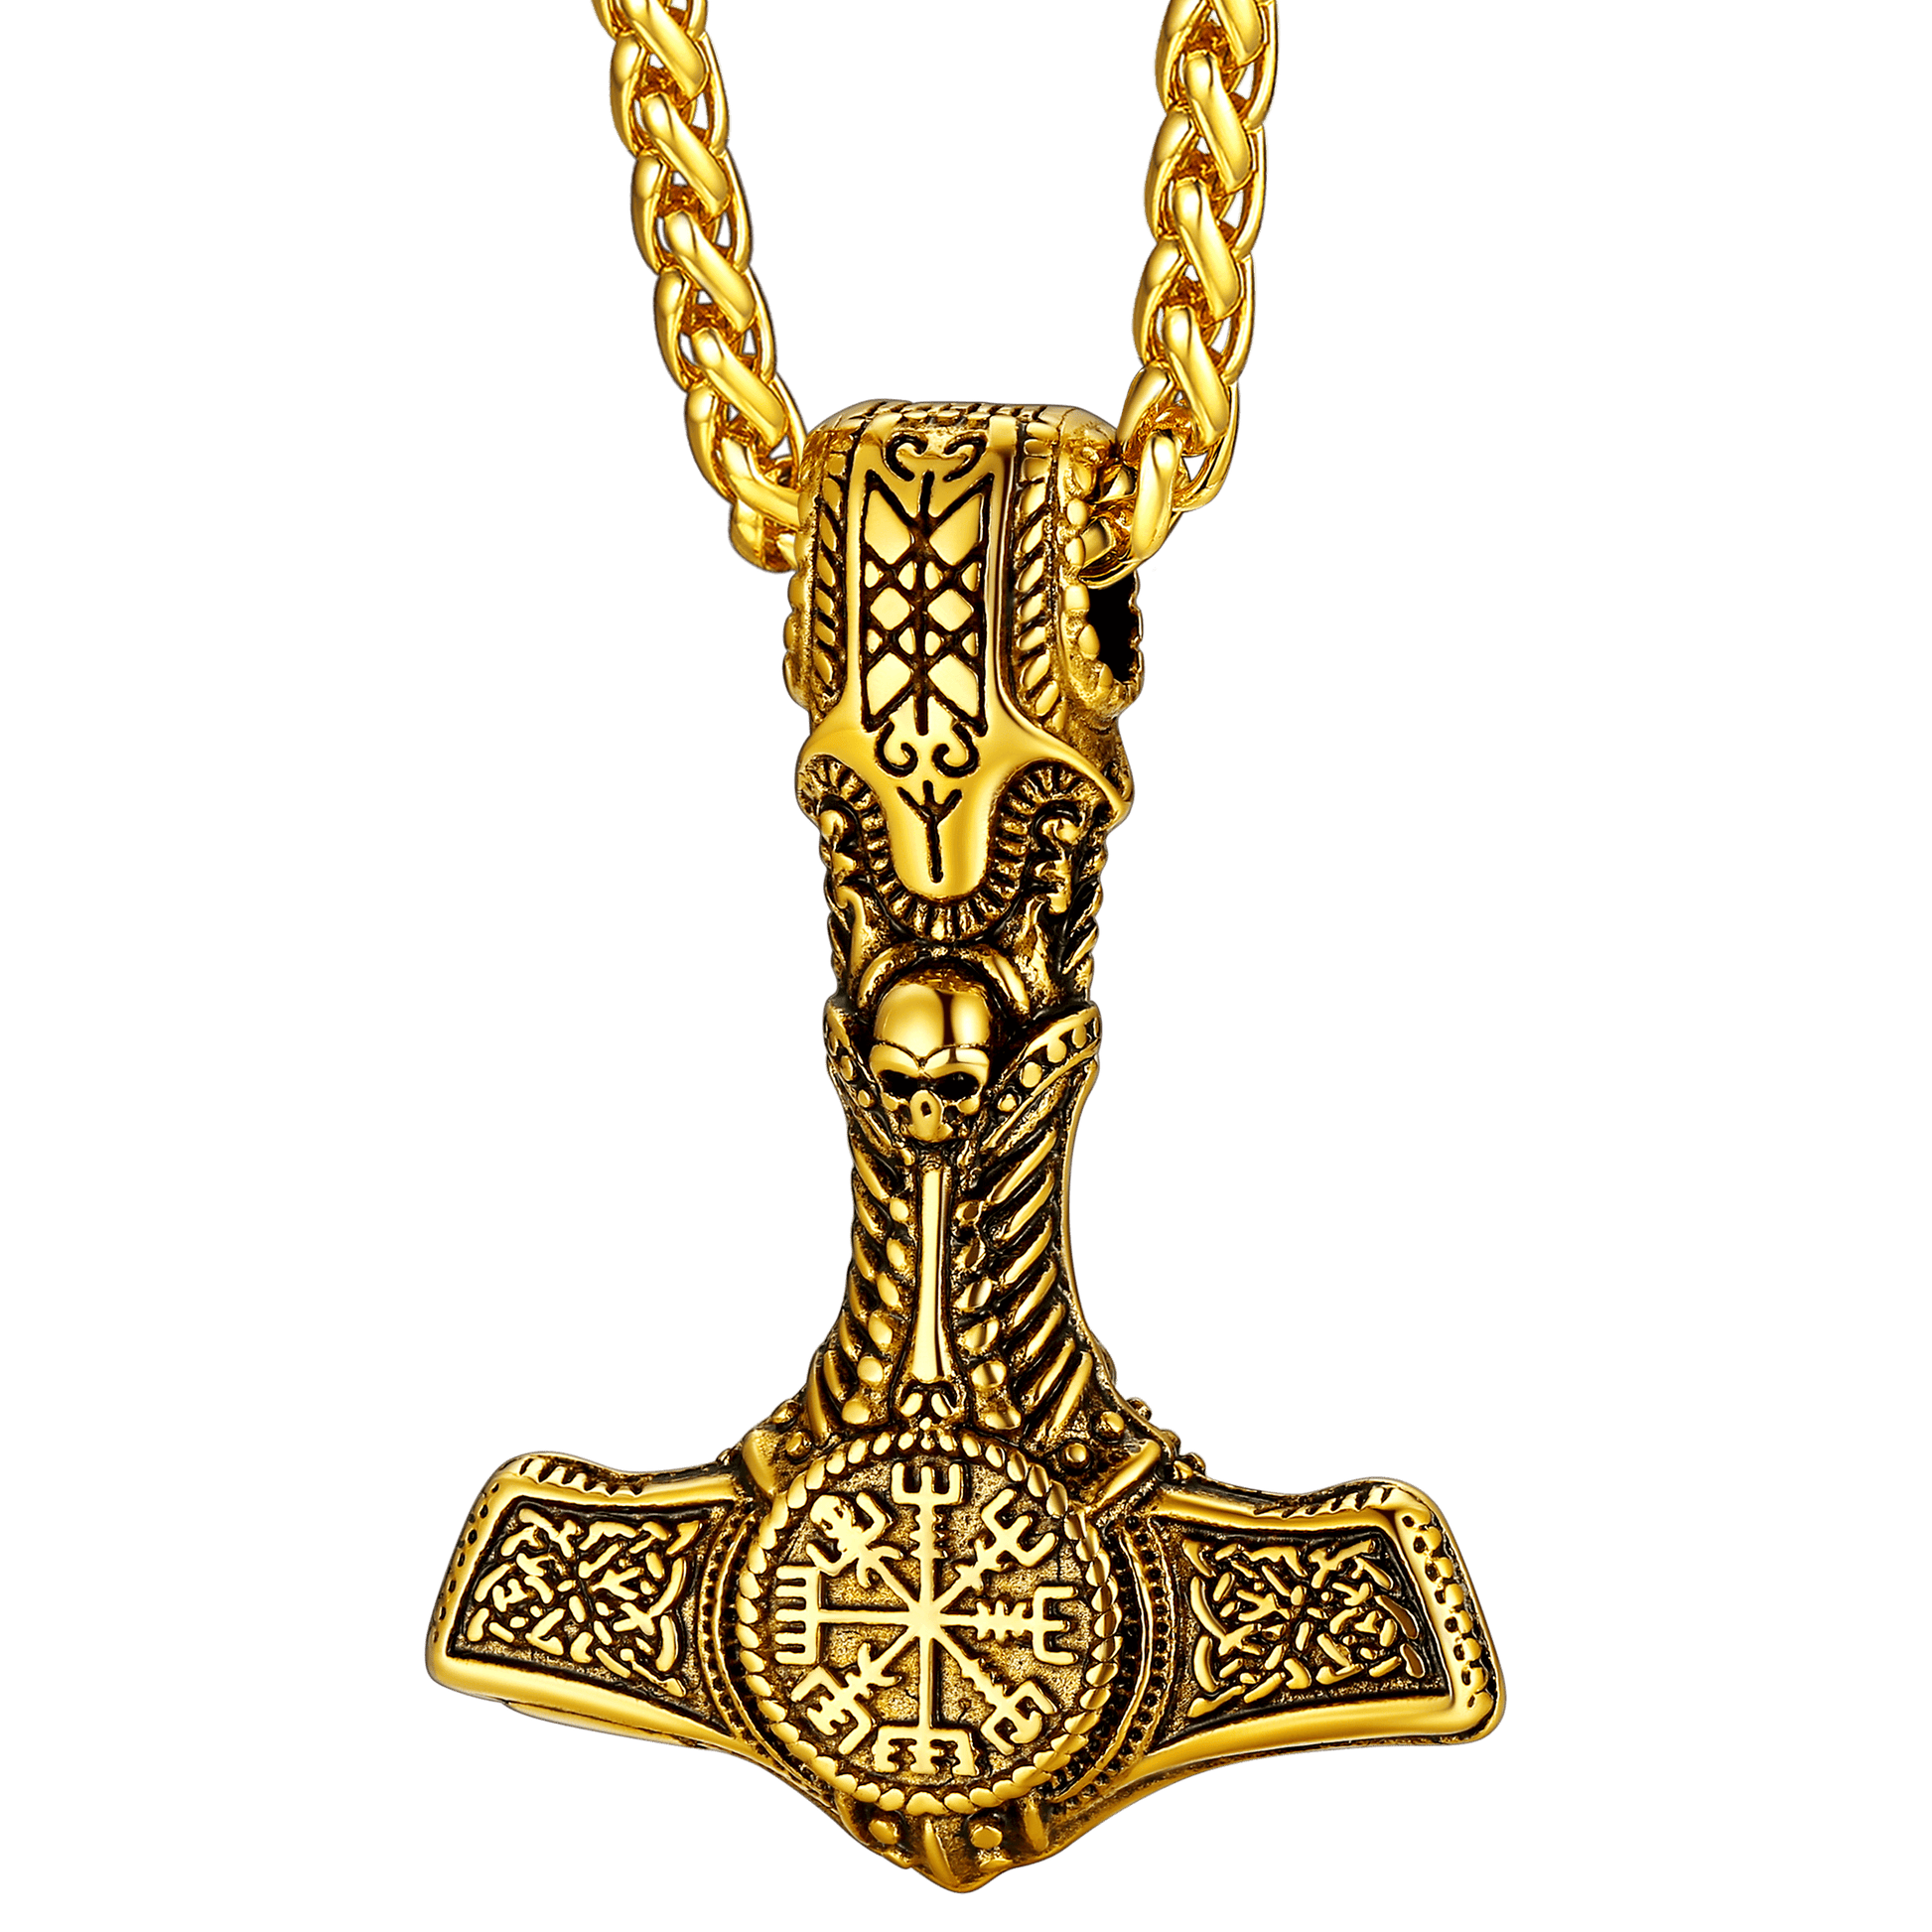 FaithHeart Viking Thors Hammer Necklace With Compass For Men FaithHeart